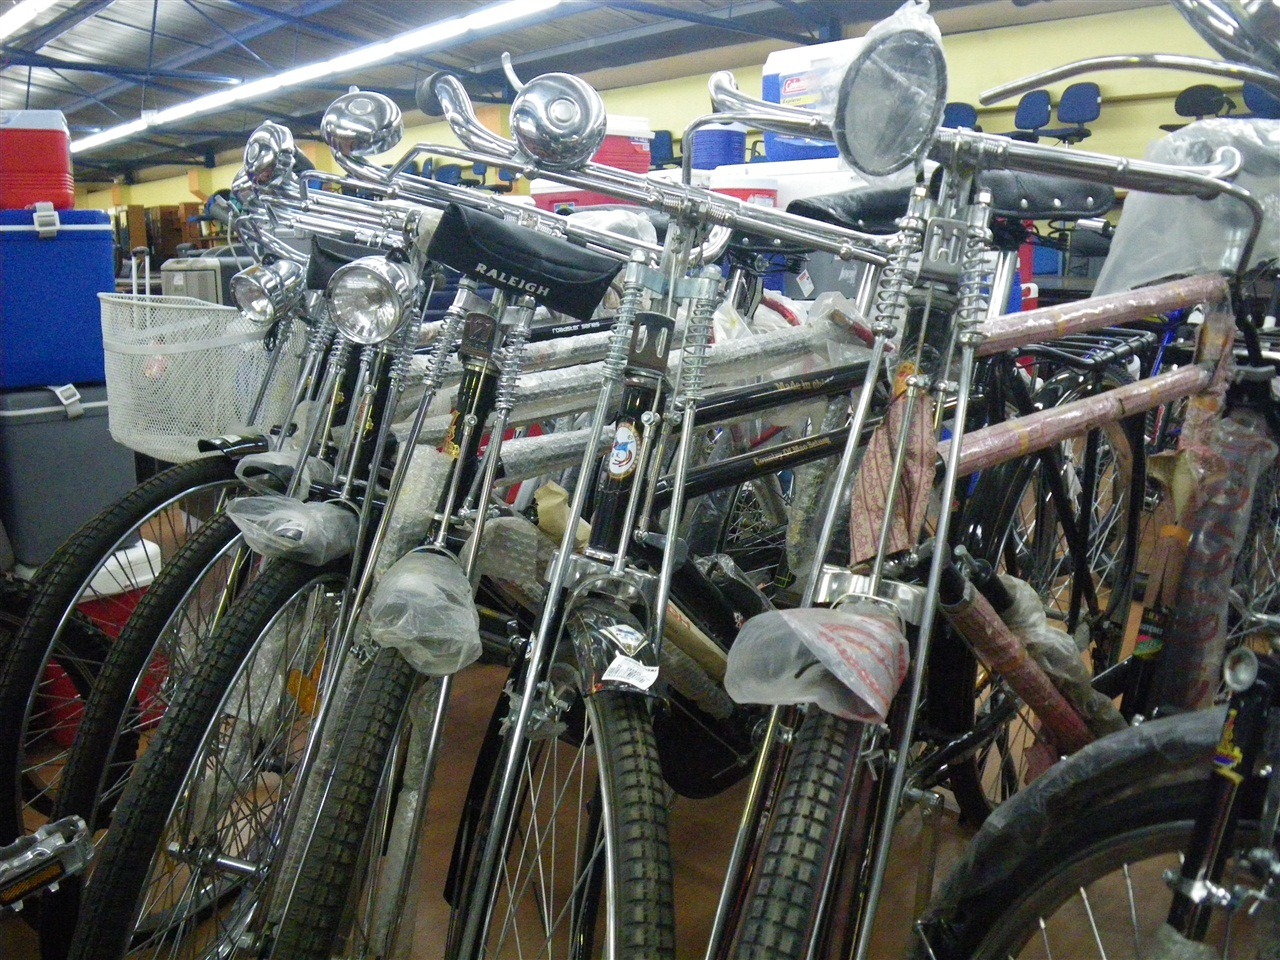 nakumatt bicycle prices